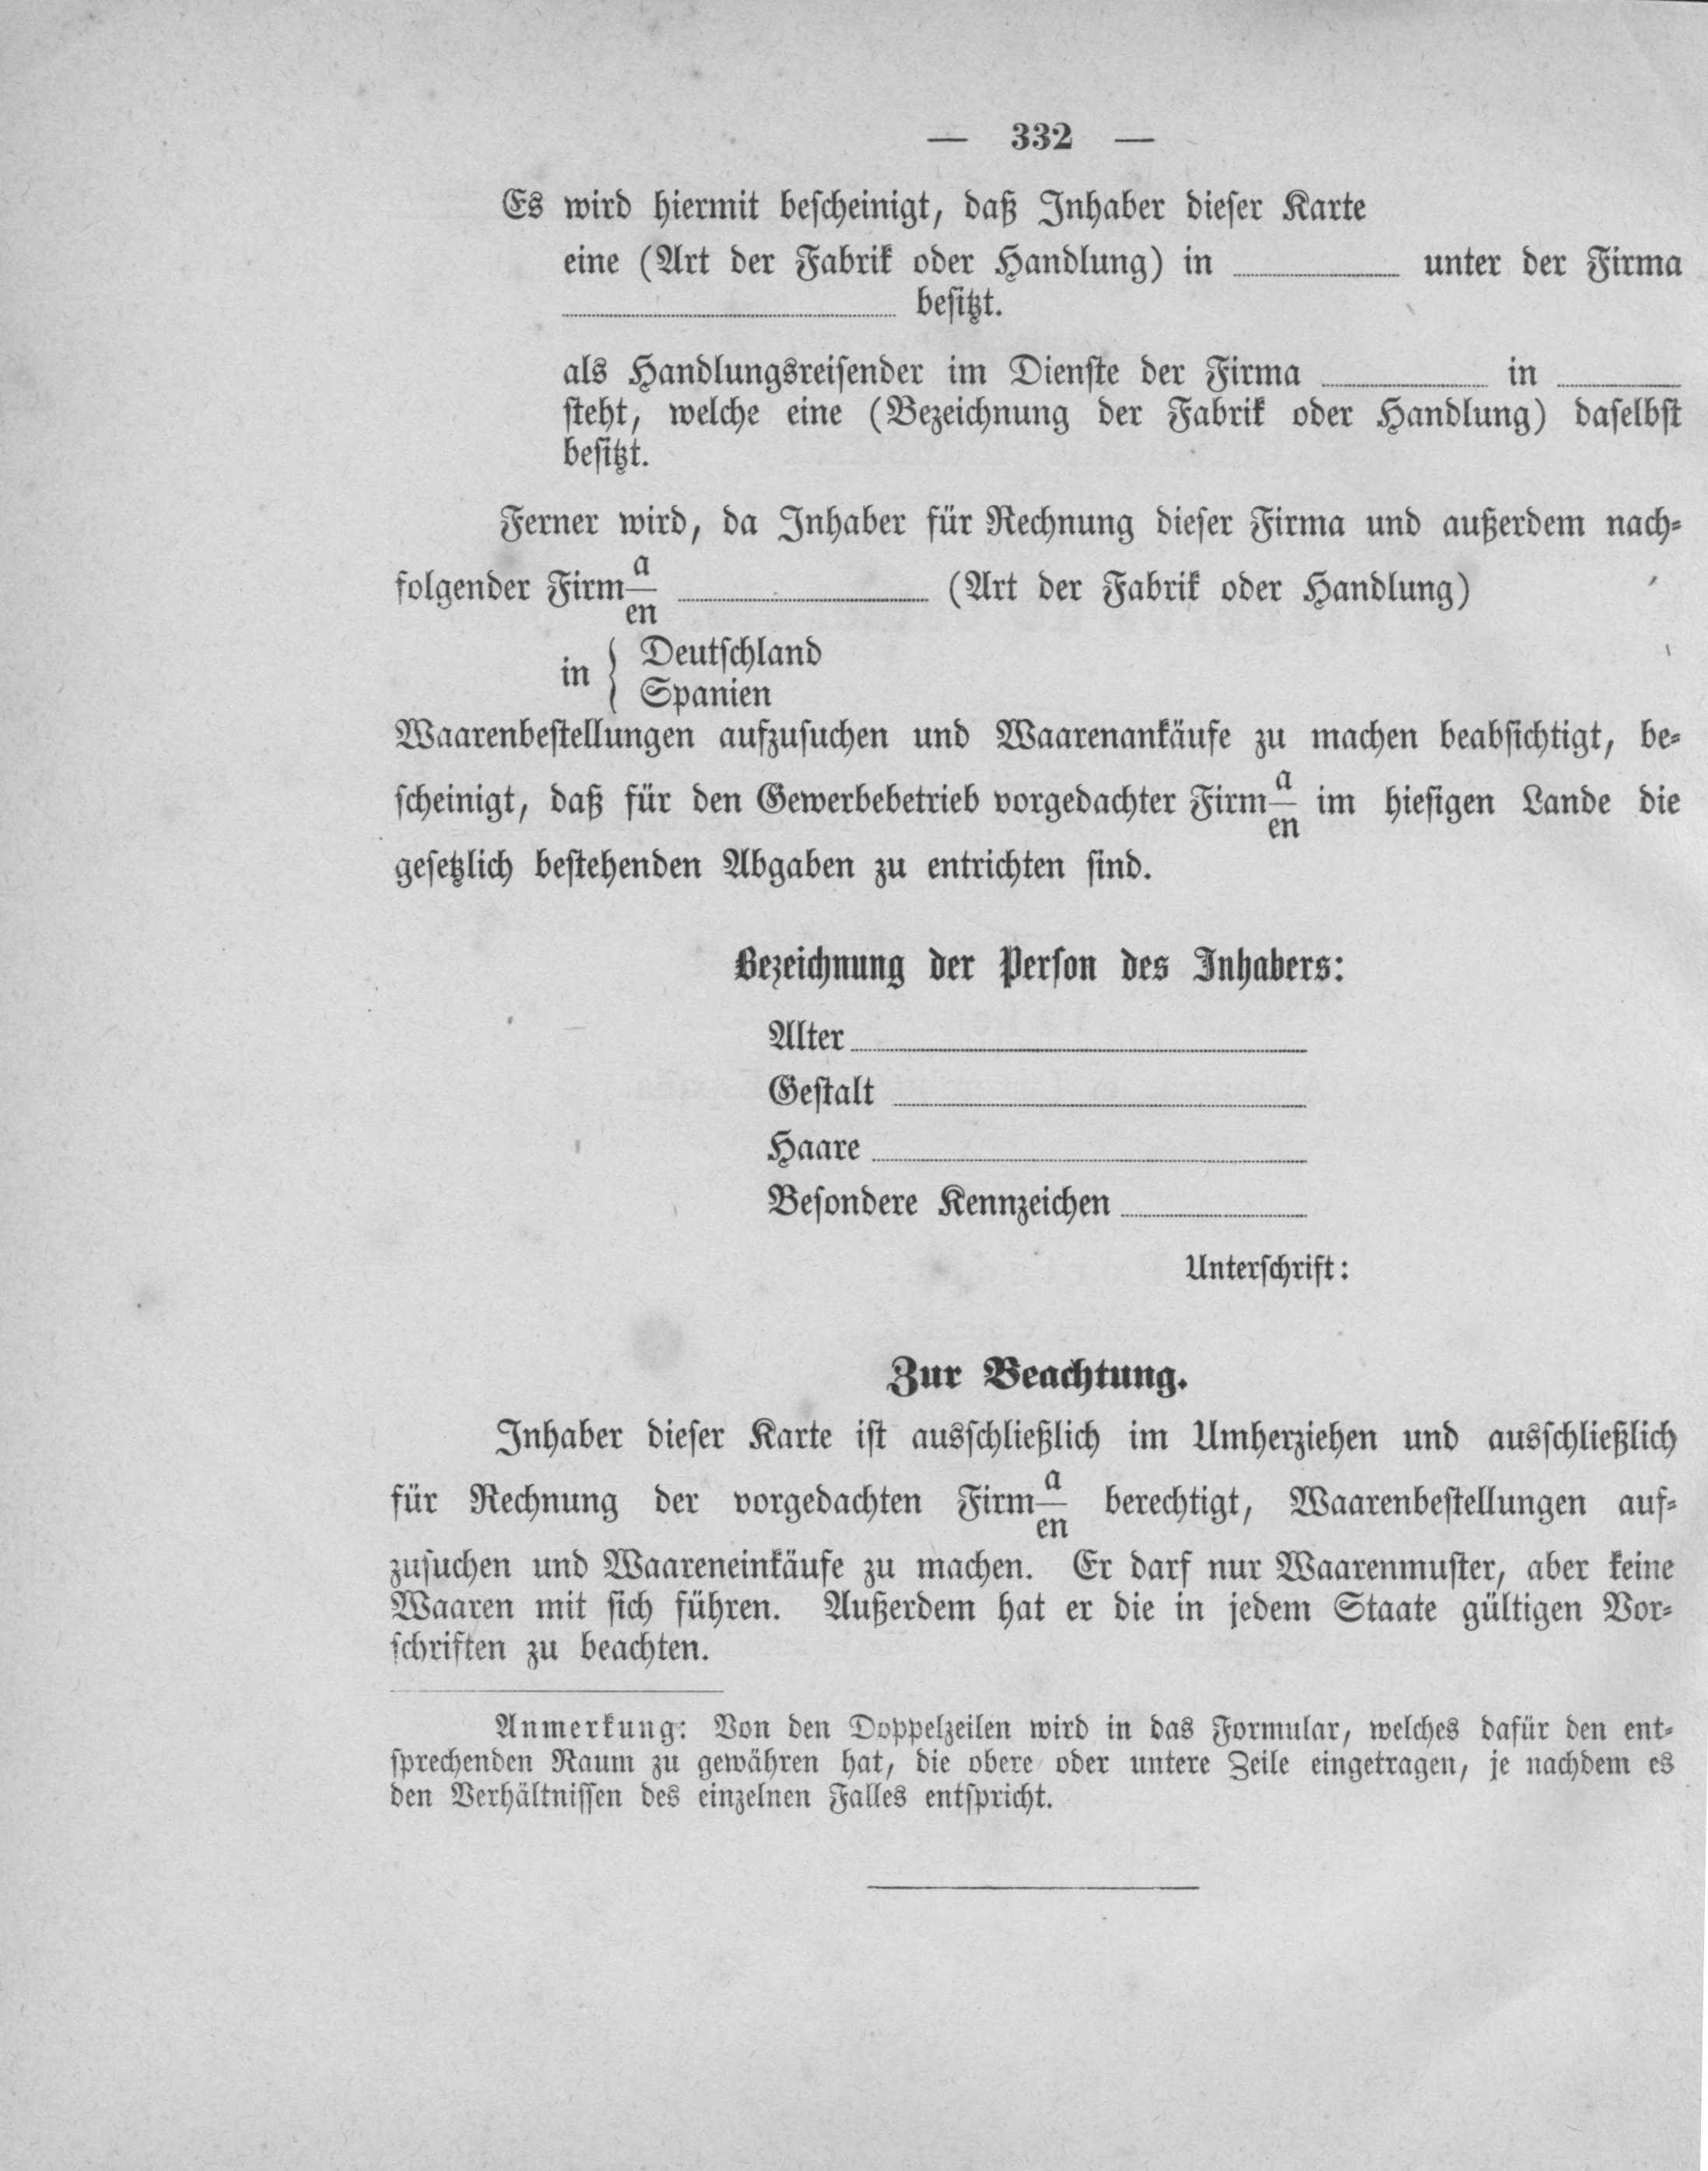 Artifact Badeværelse Jeg har erkendt det File:Deutsches Reichsgesetzblatt 1883 024 332.jpg - Wikimedia Commons